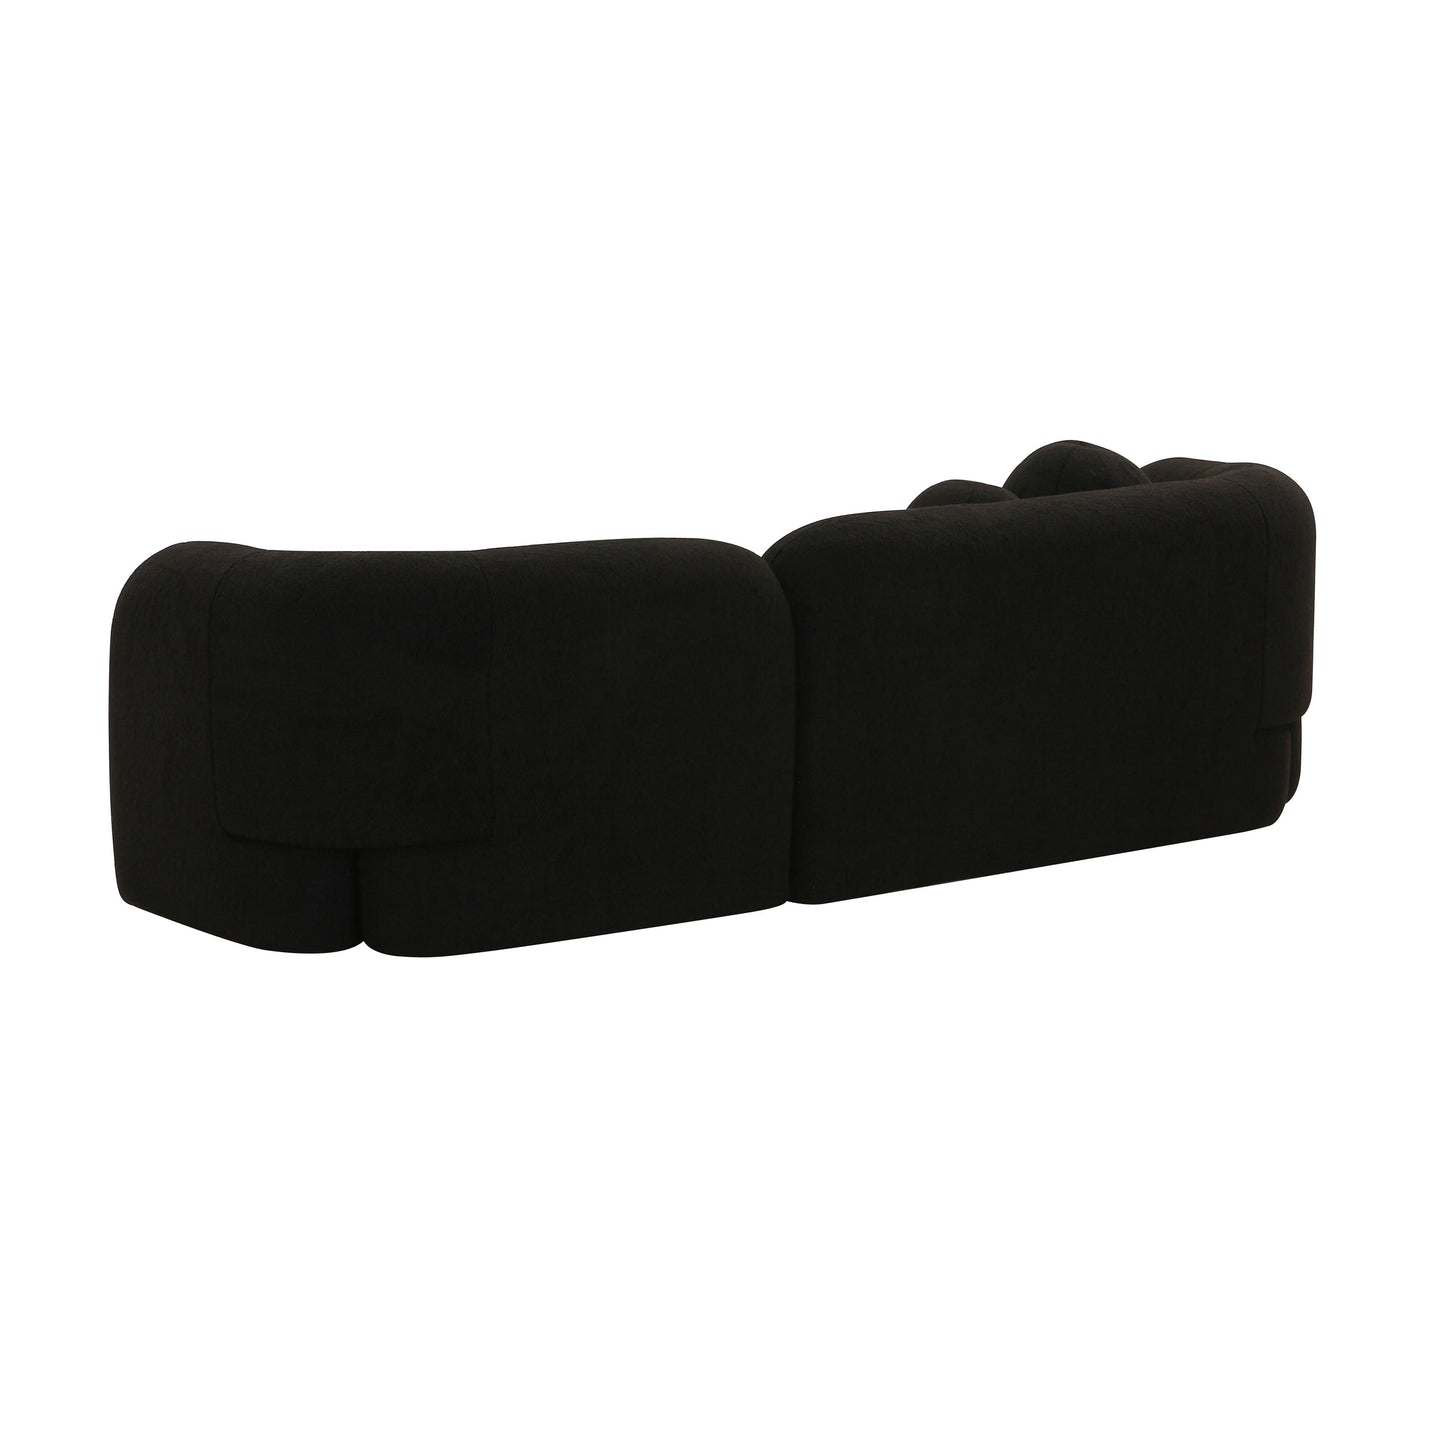 rella black faux fur sofa